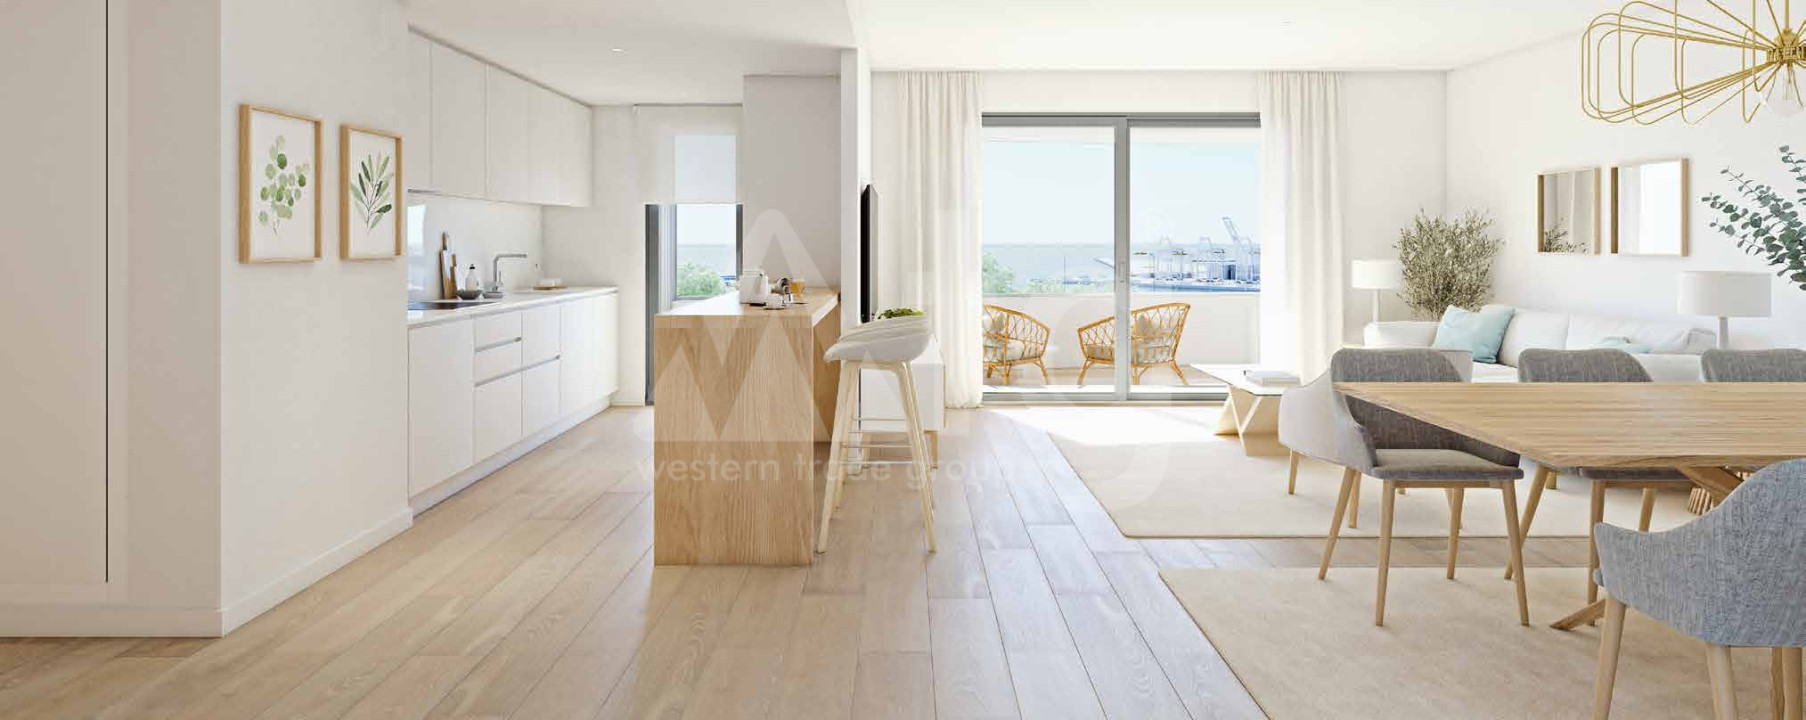 3 bedroom Apartment in Alicante - AEH25897 - 3